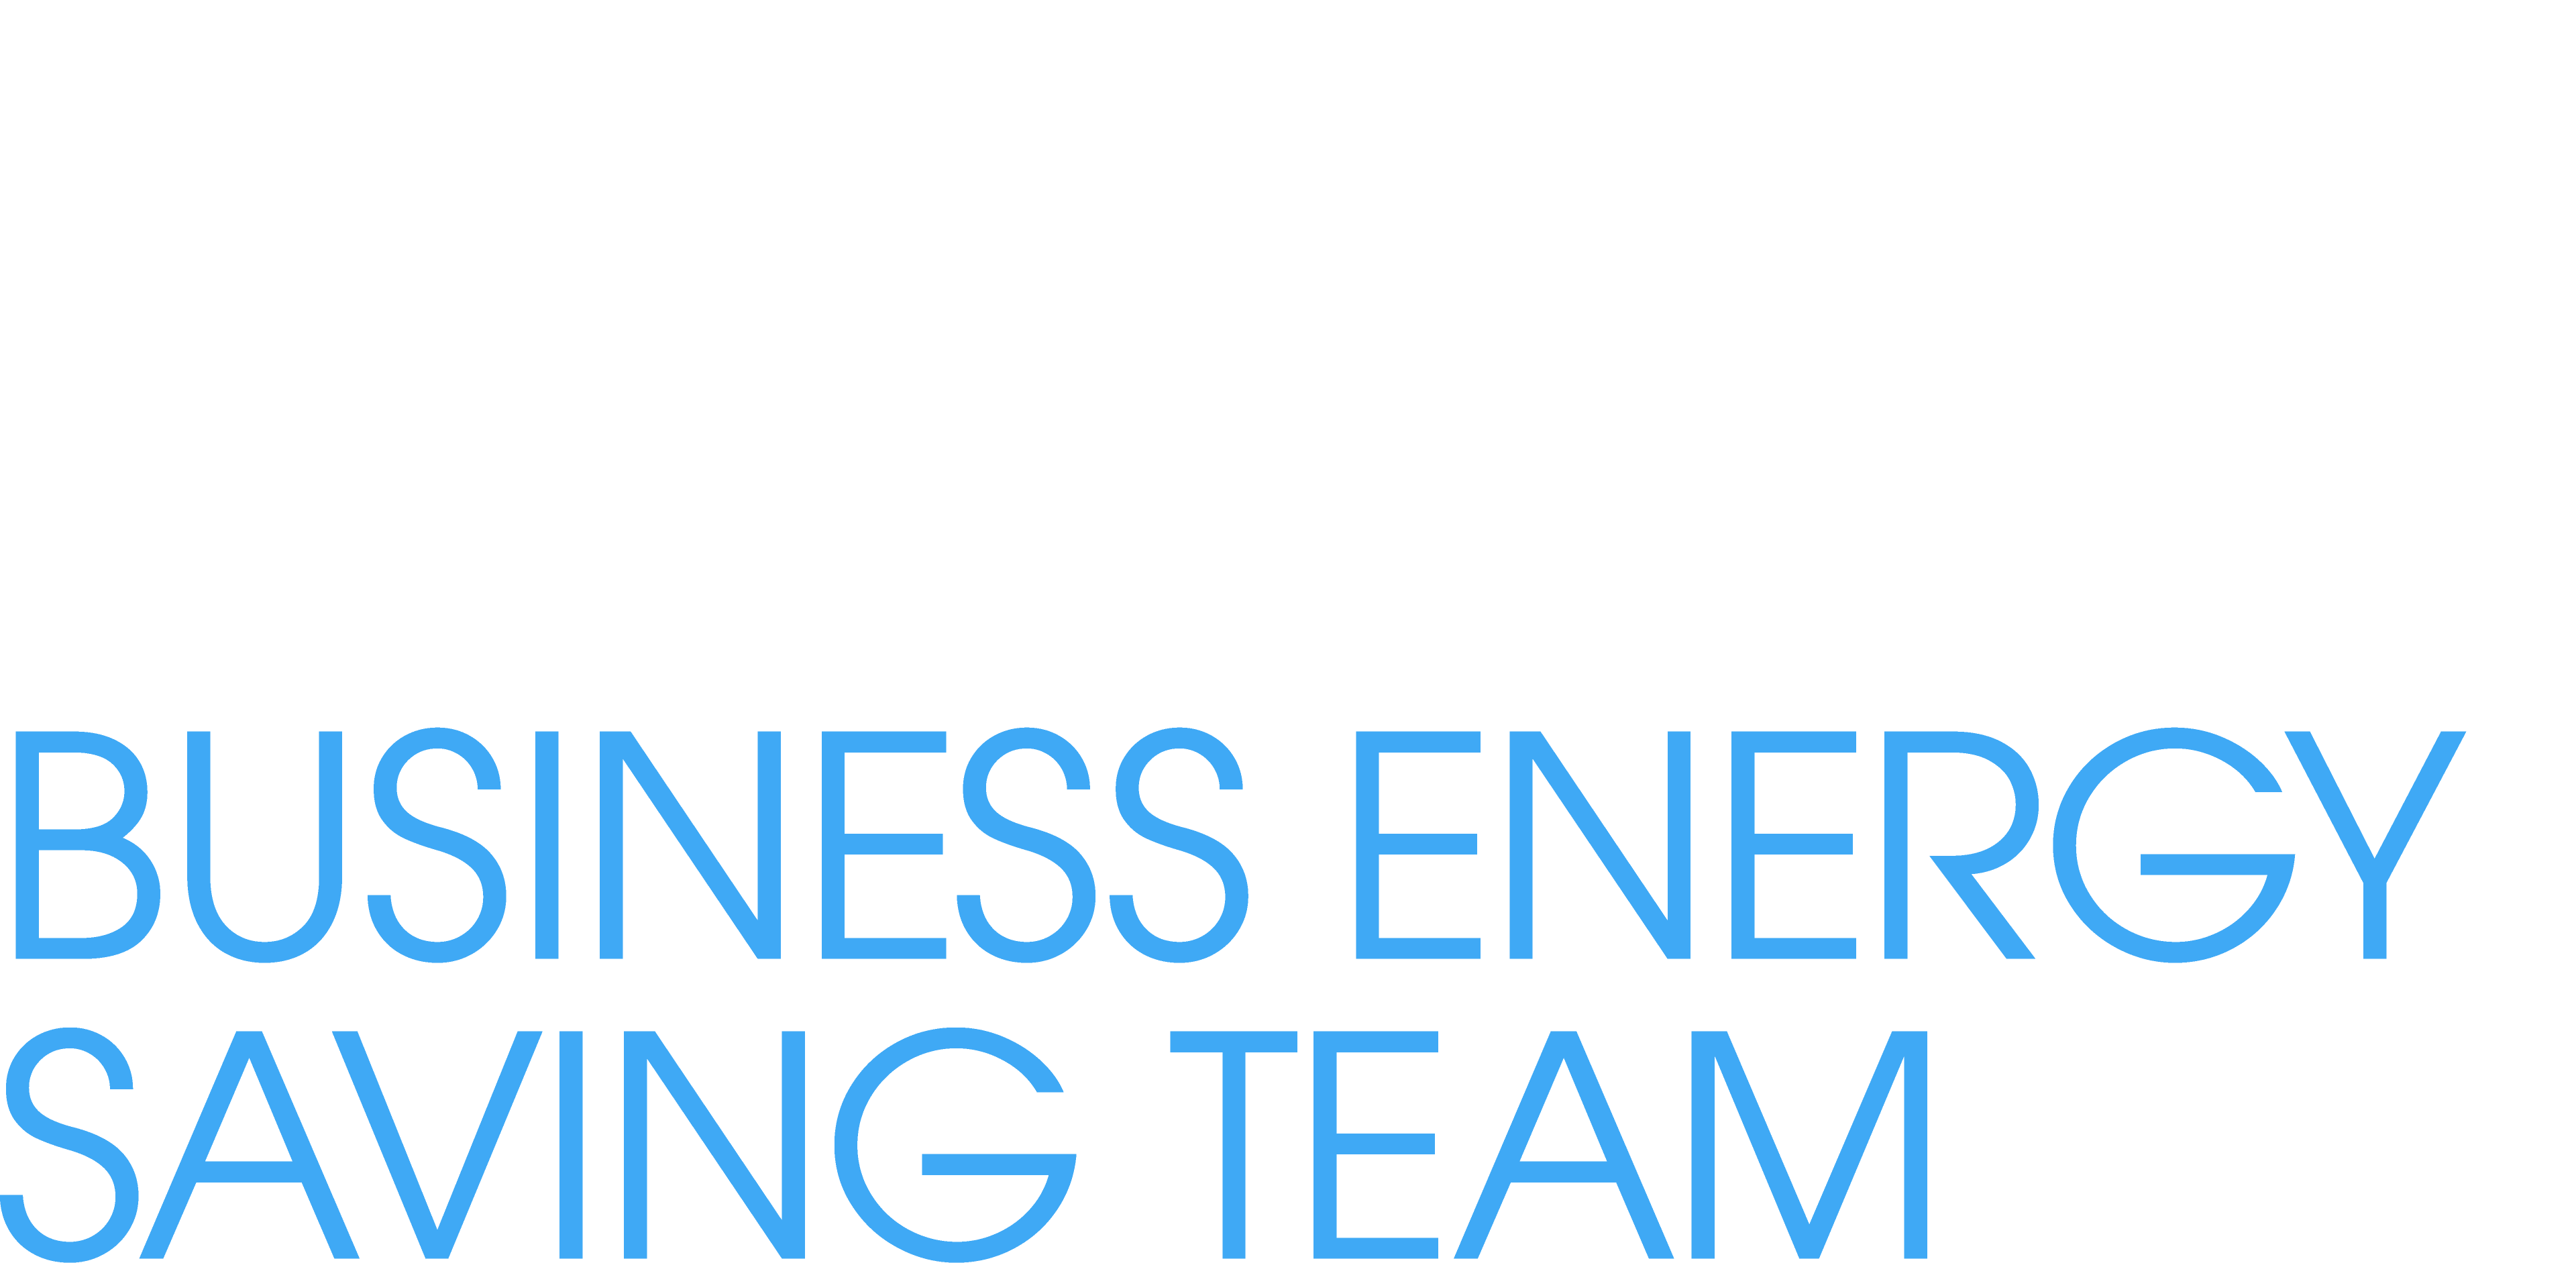 Business Energy Saving Team logo